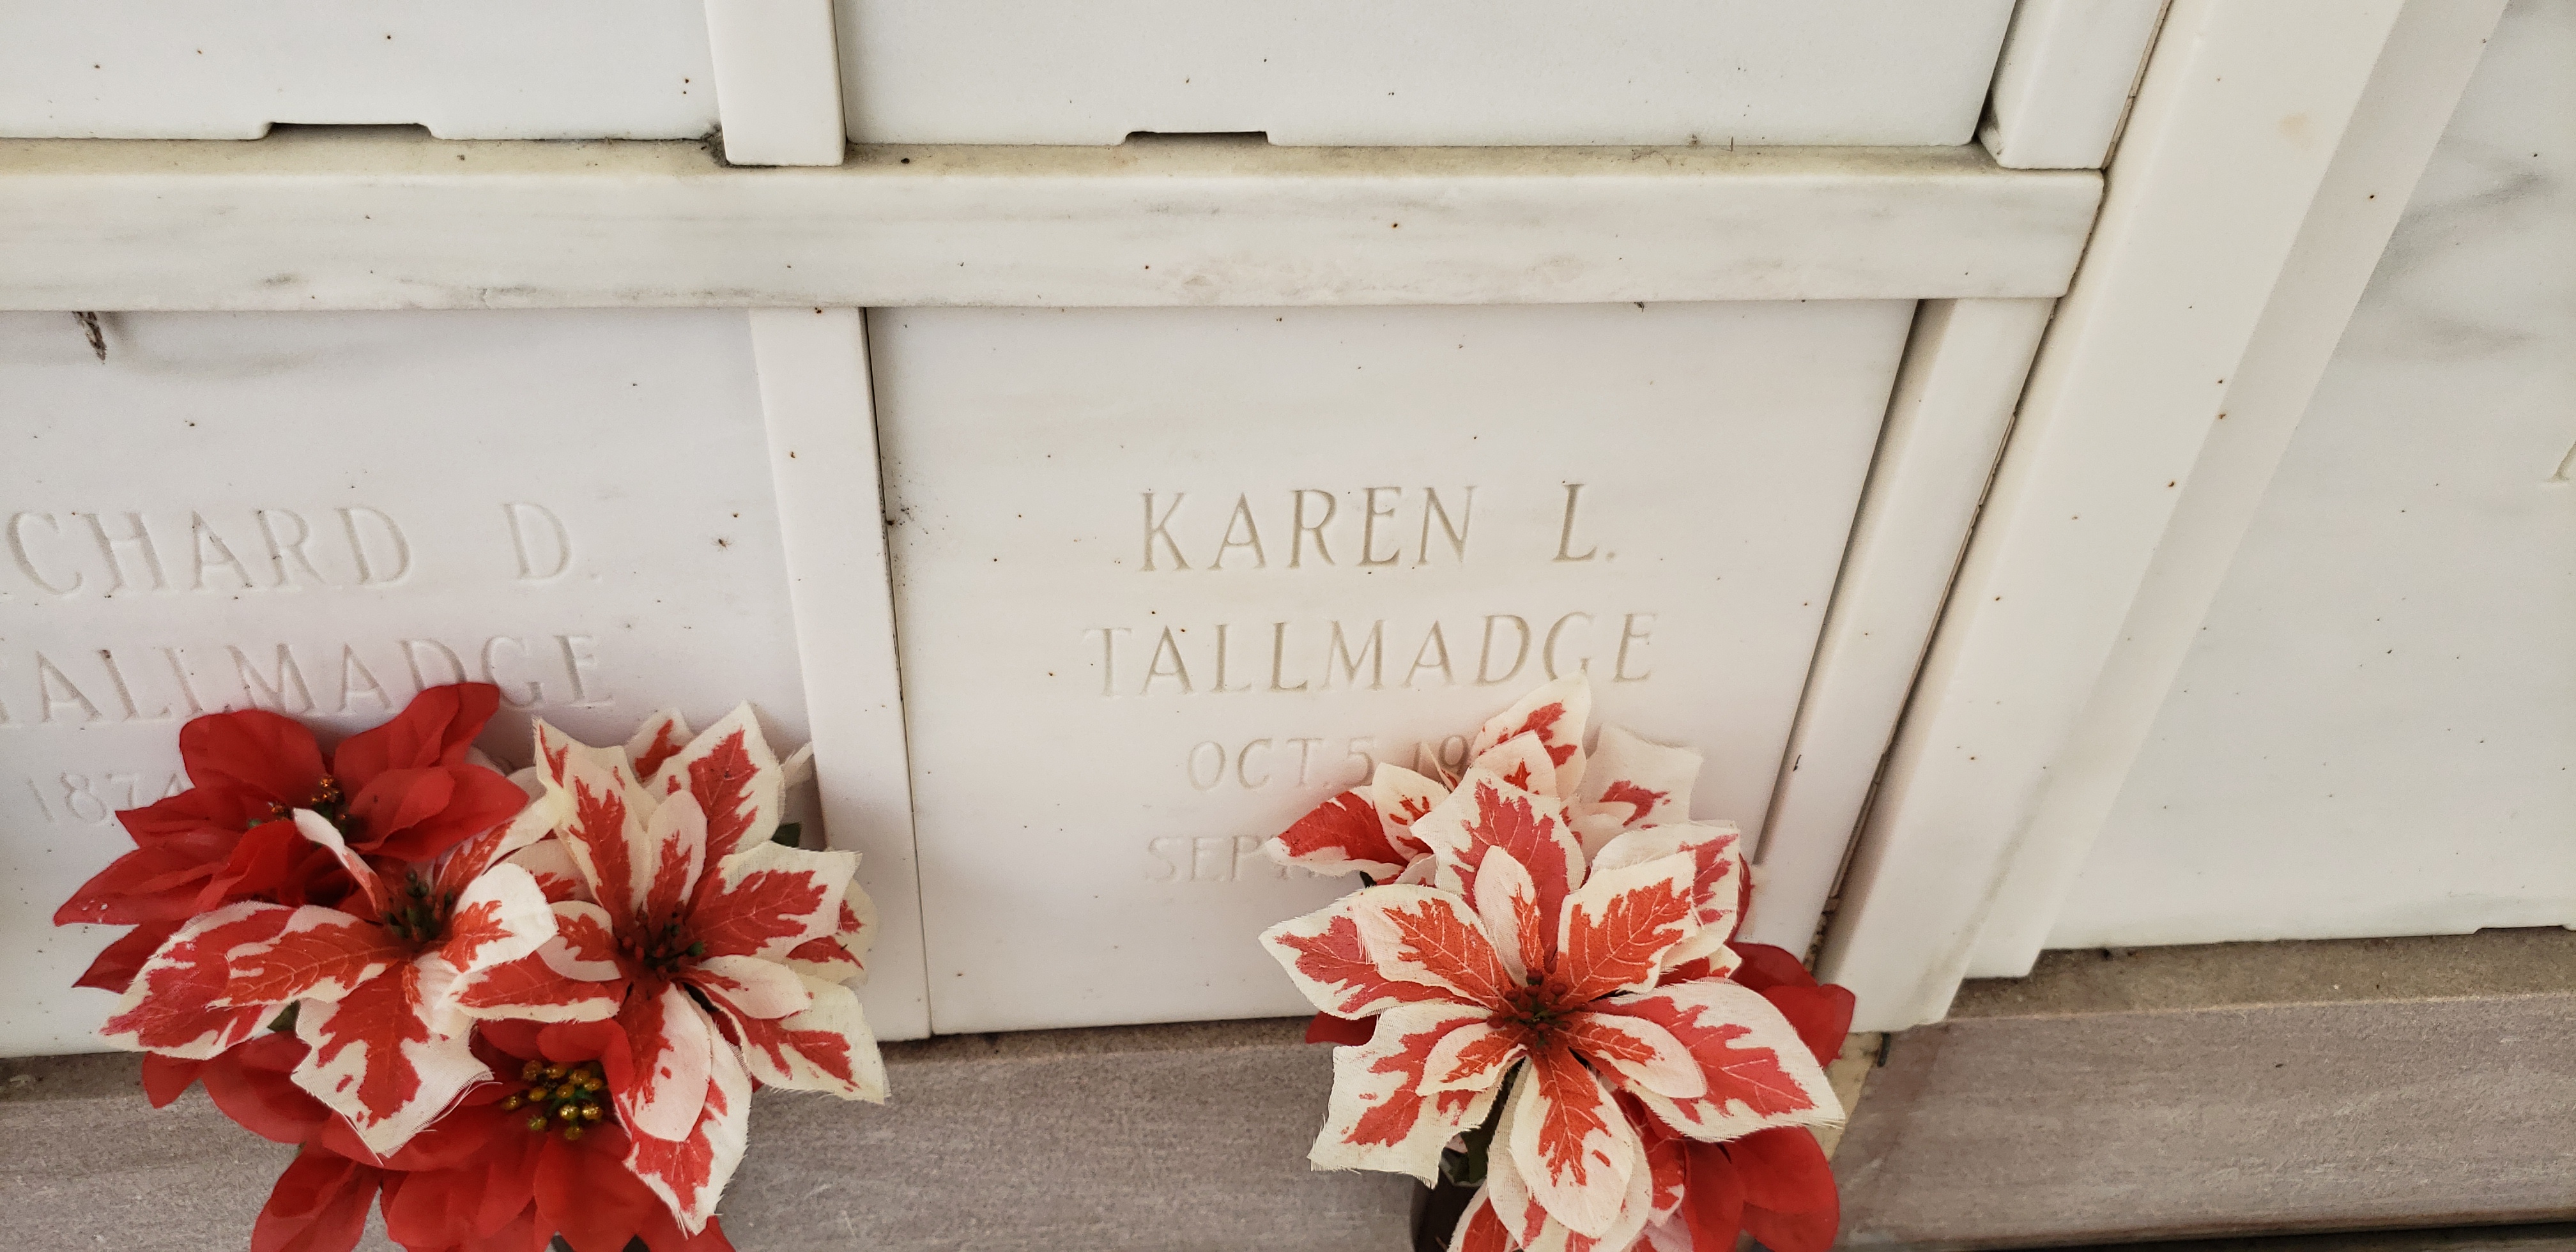 Karen L Tallmadge